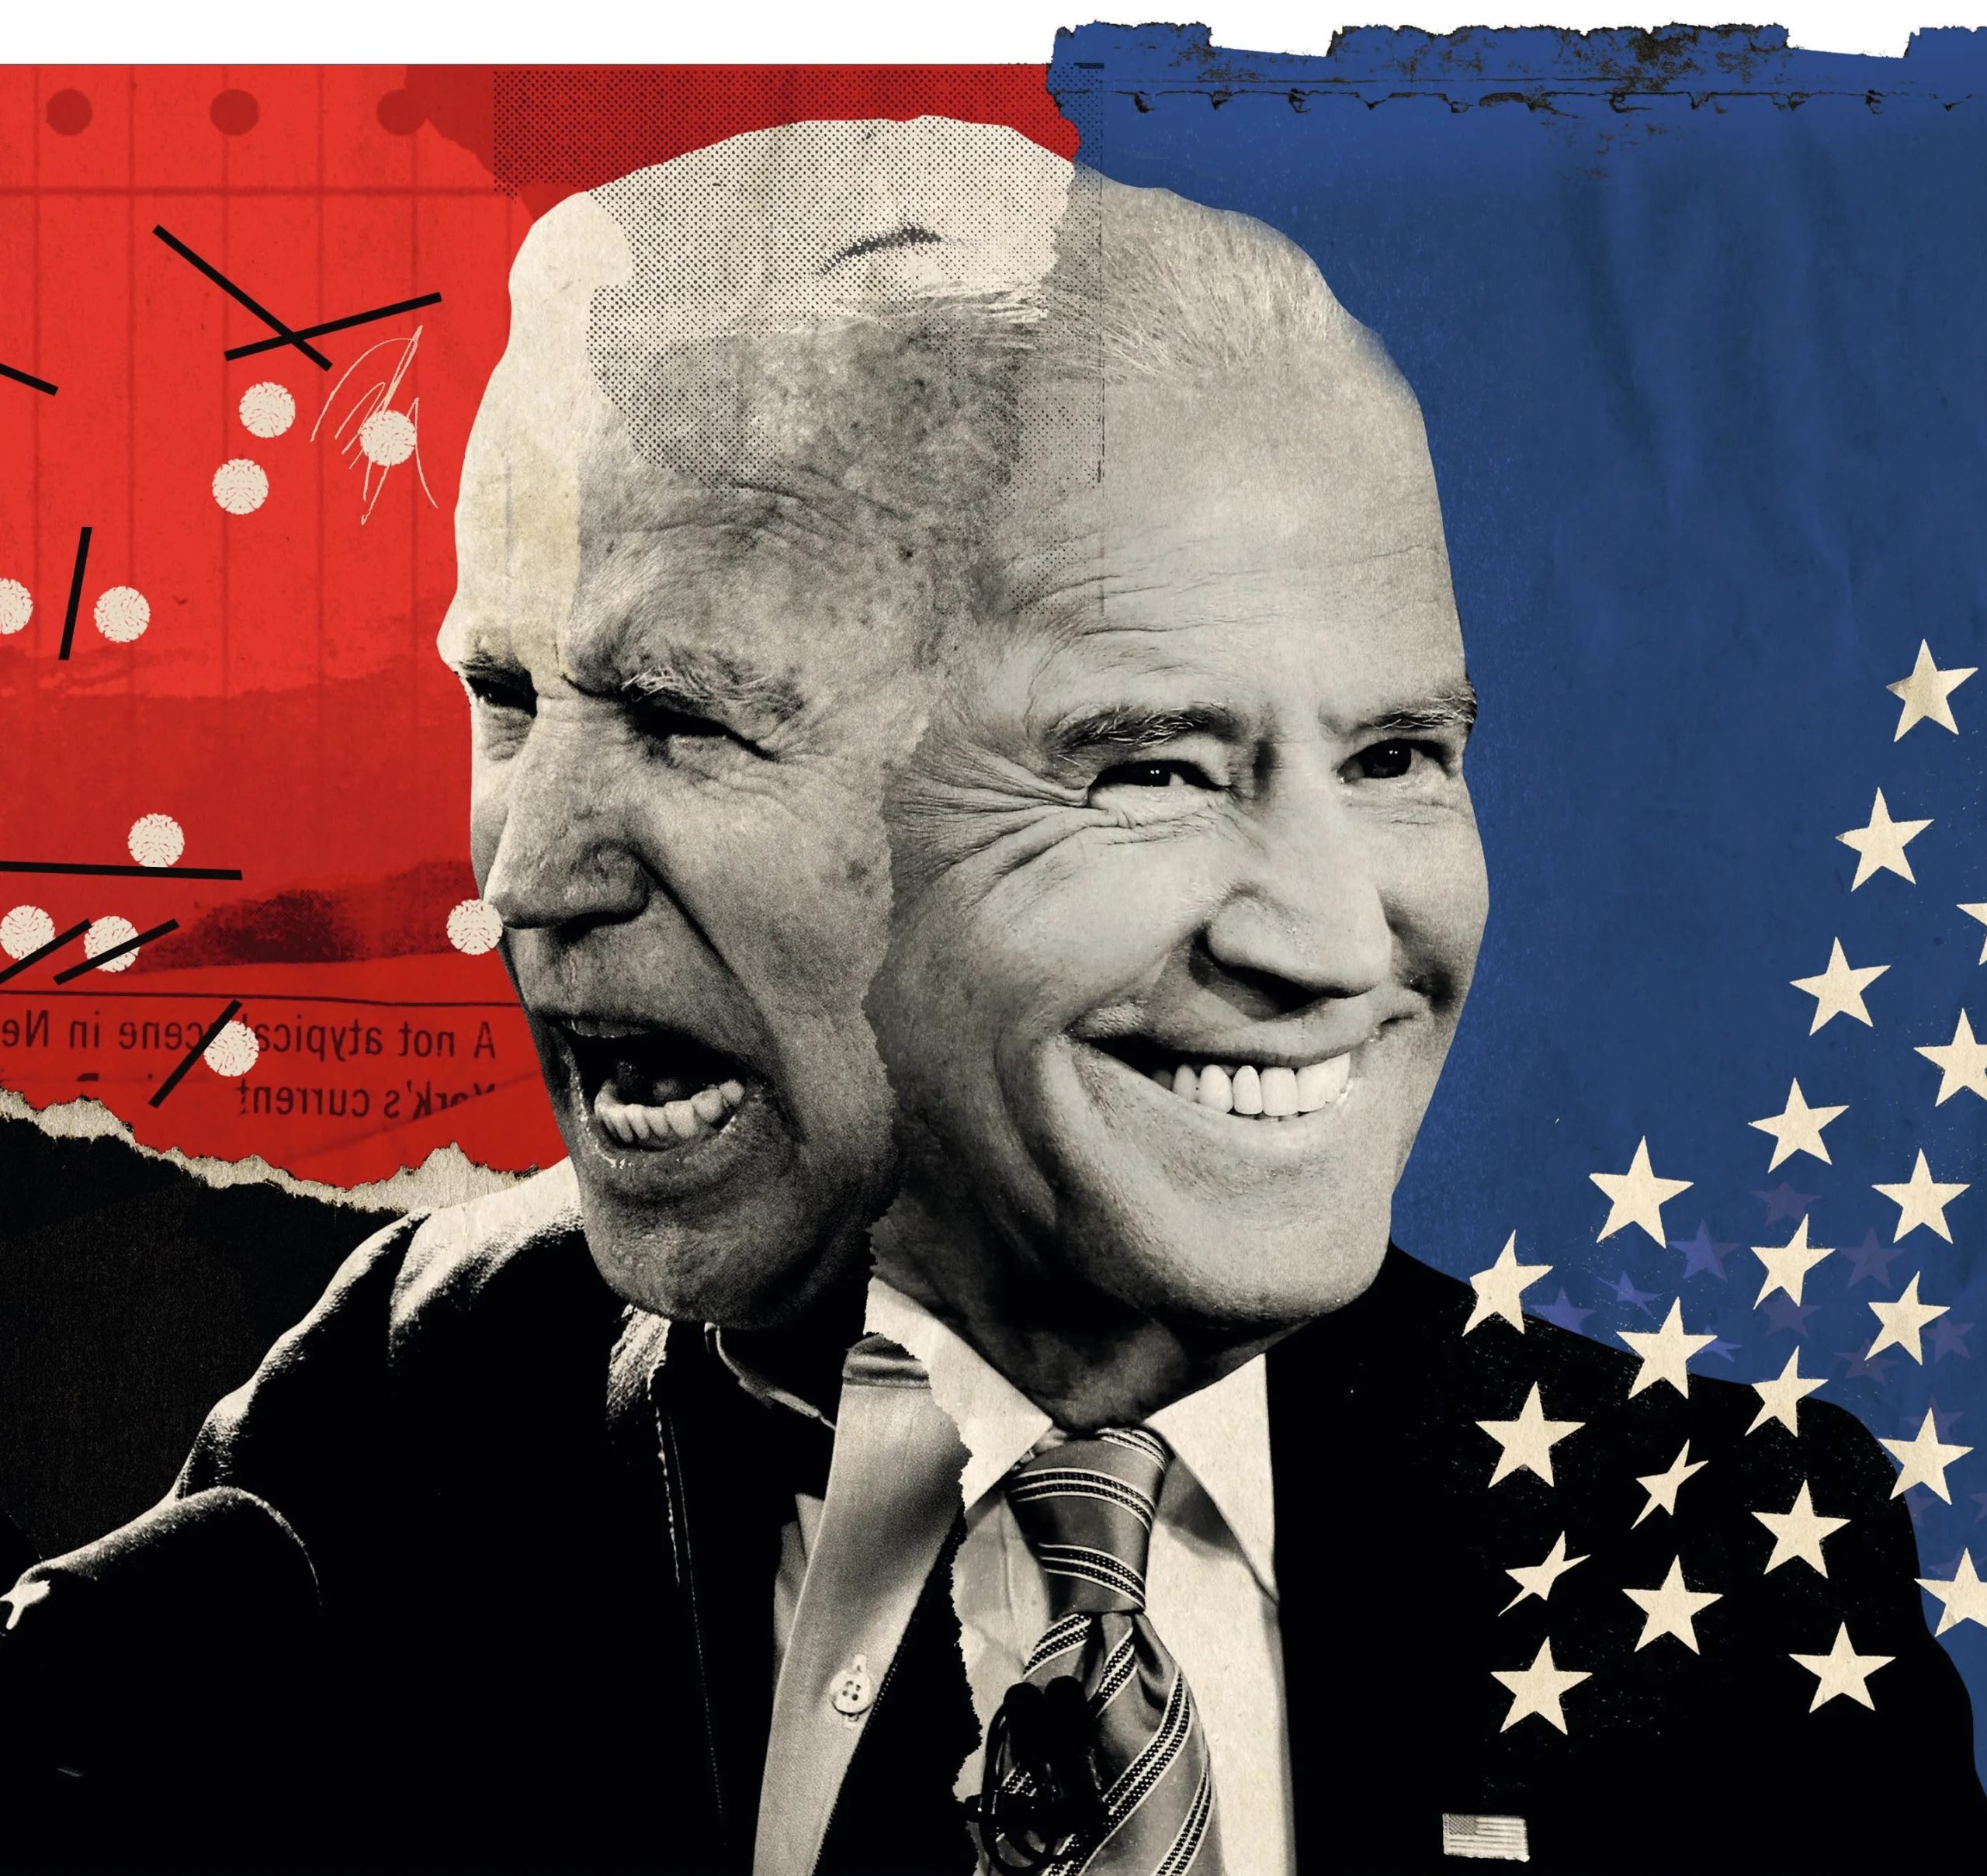 Un año de mentiras de Joe Biden Por Eric Toussaint | Comité para la Abolición de la Deudas Ilegítimas (CADTM)